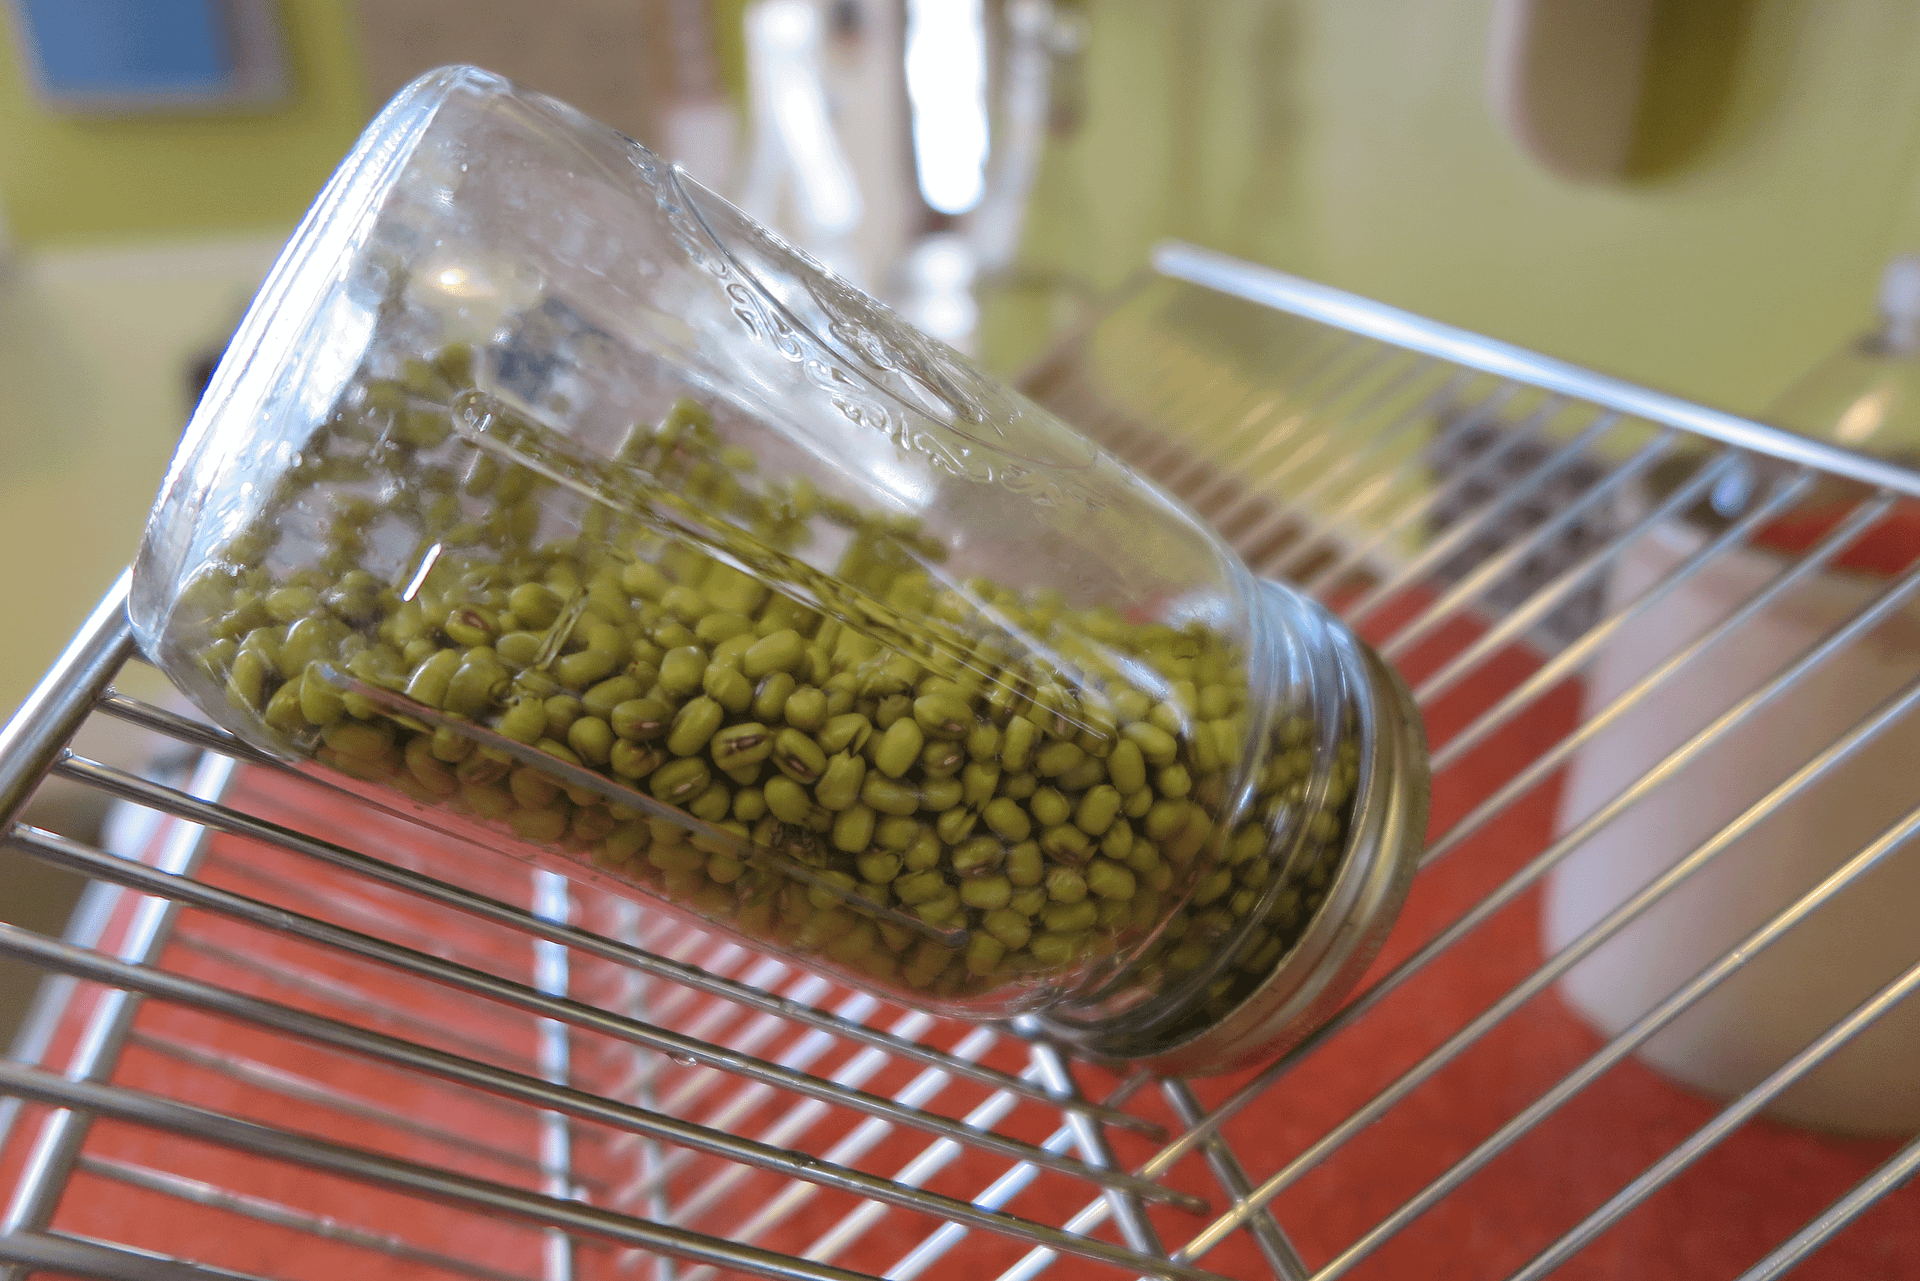 Mason jar of mug beans tilted upside down on a dish drying rack